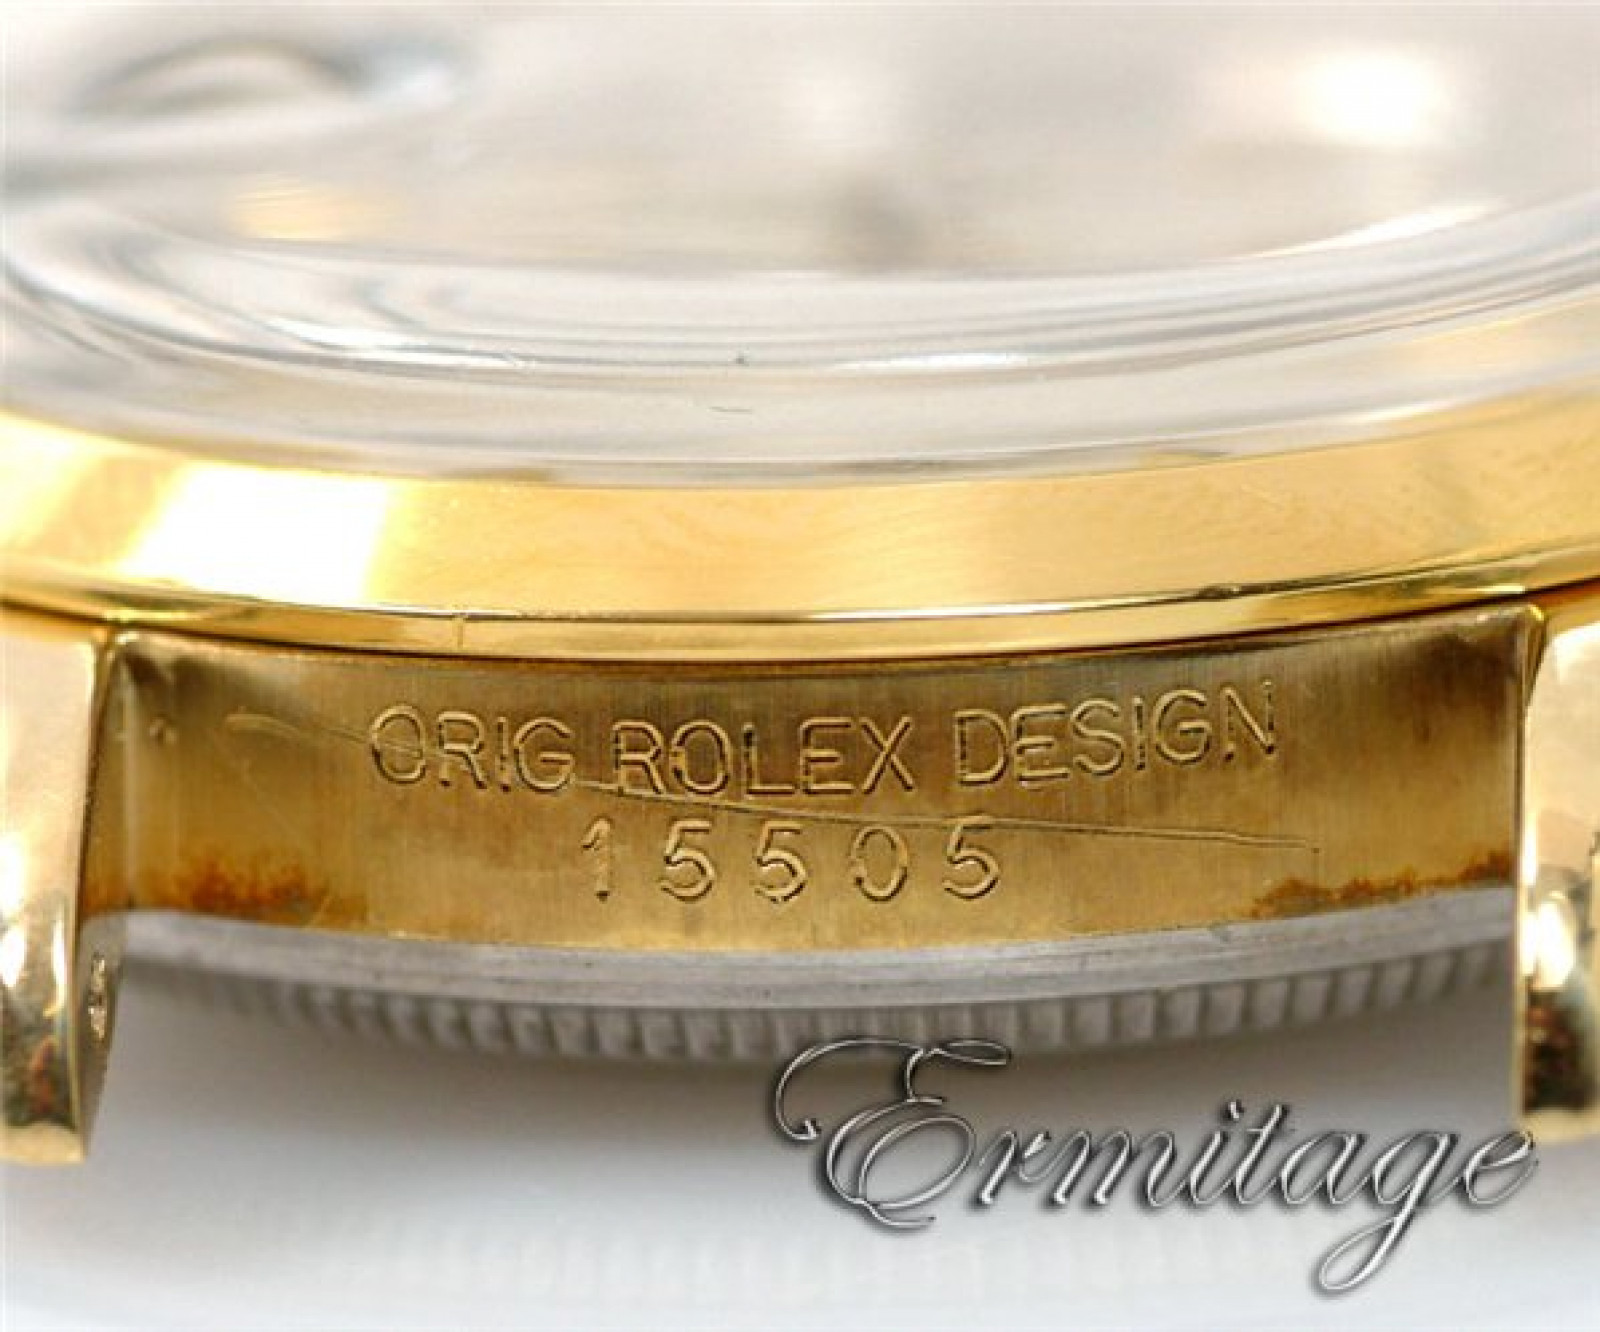 Rolex Date 15505 Gold Silver Dial 4033